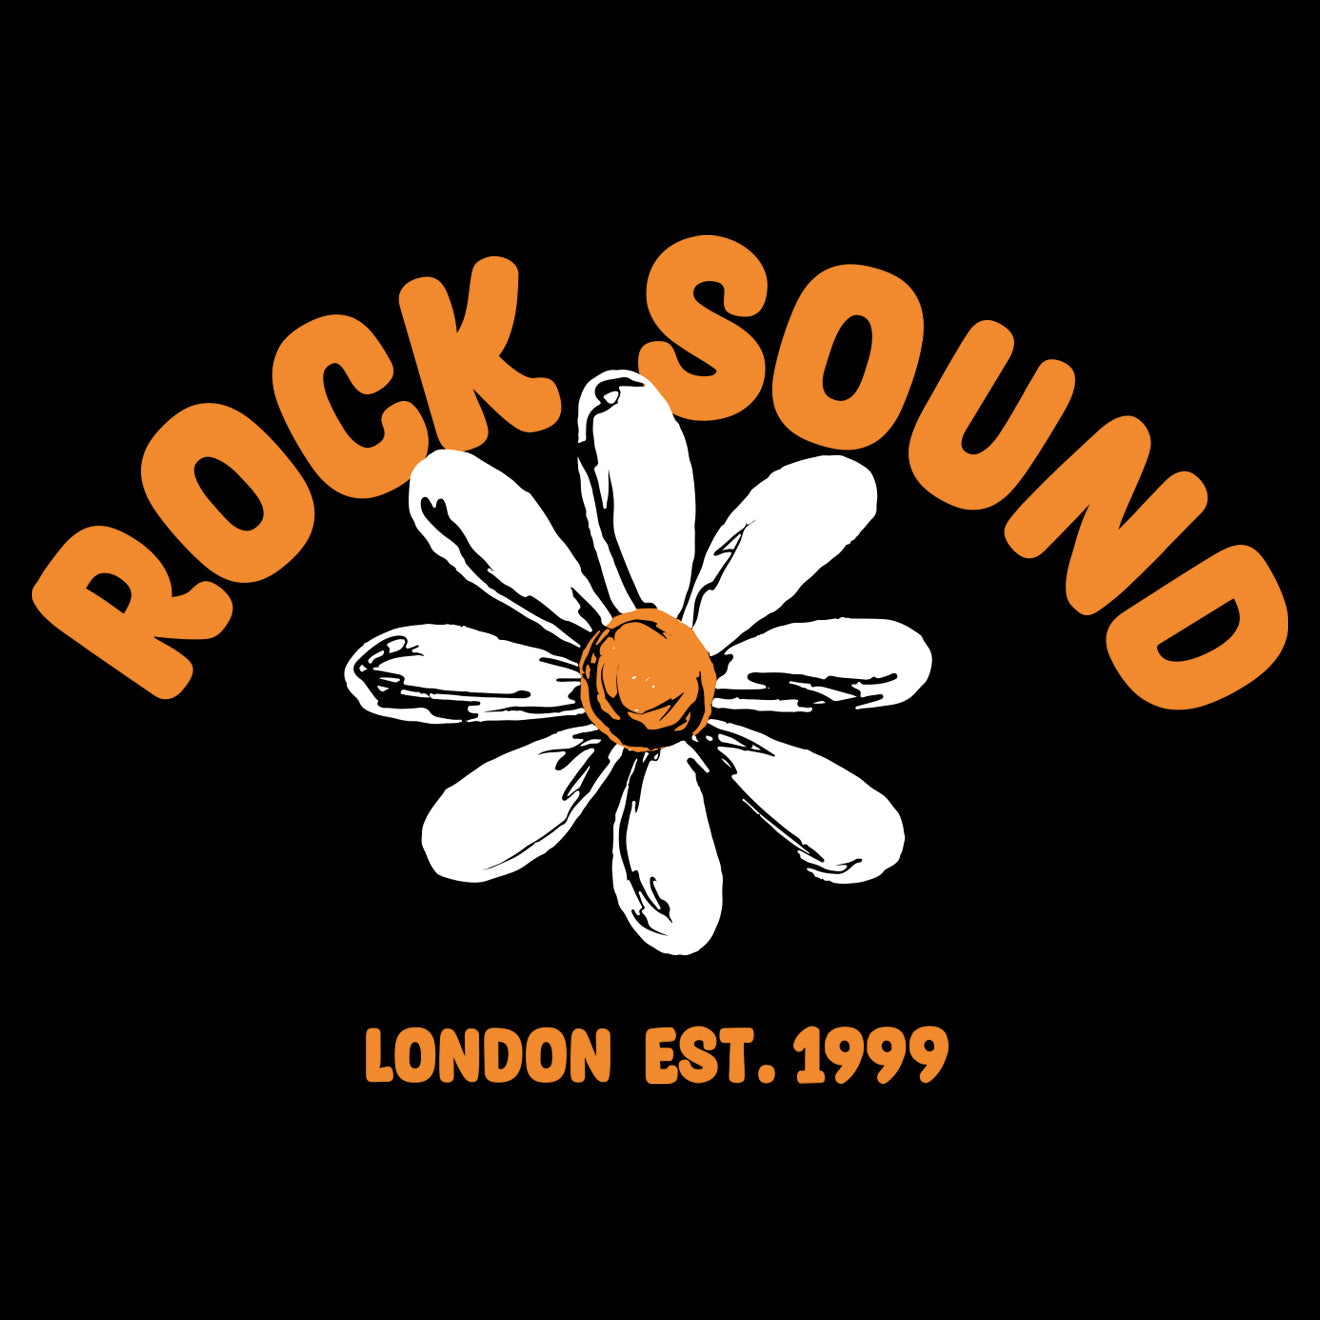 Rock Sound - Daisy 1999 T-Shirt